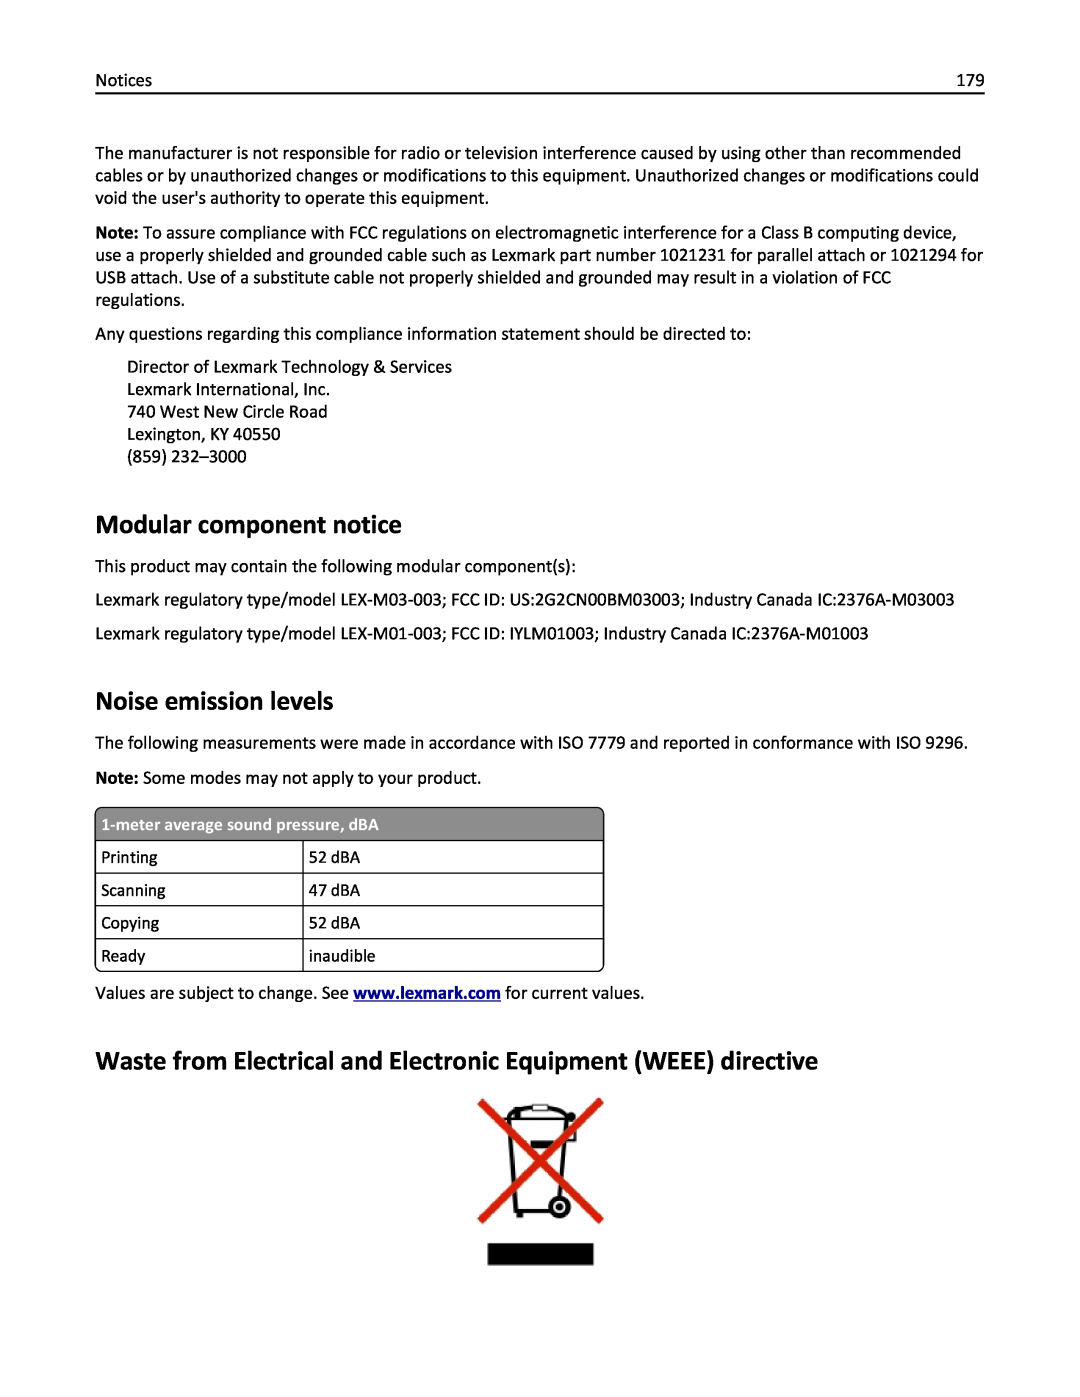 Lexmark 200, 20E manual Modular component notice, Noise emission levels 